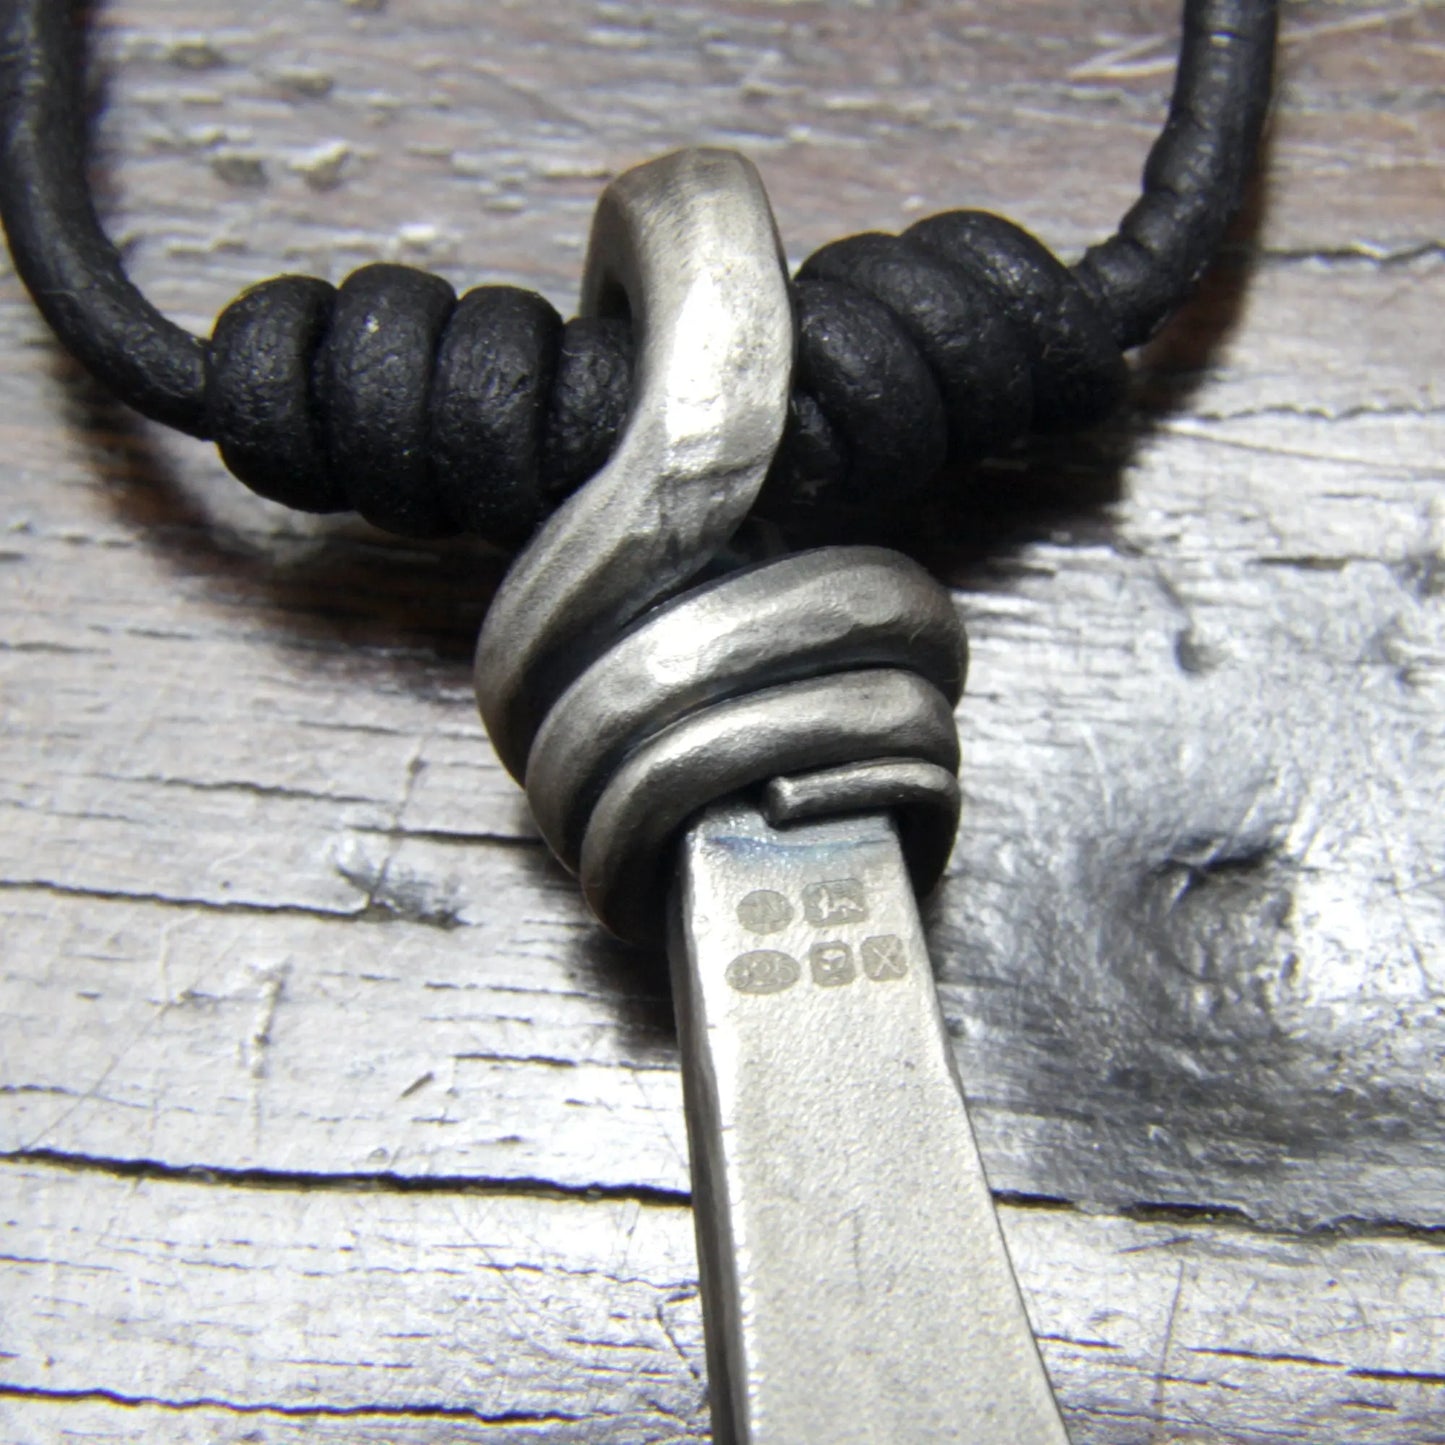 Large Solid Silver Thor's Hammer pendant, Mjolnir.